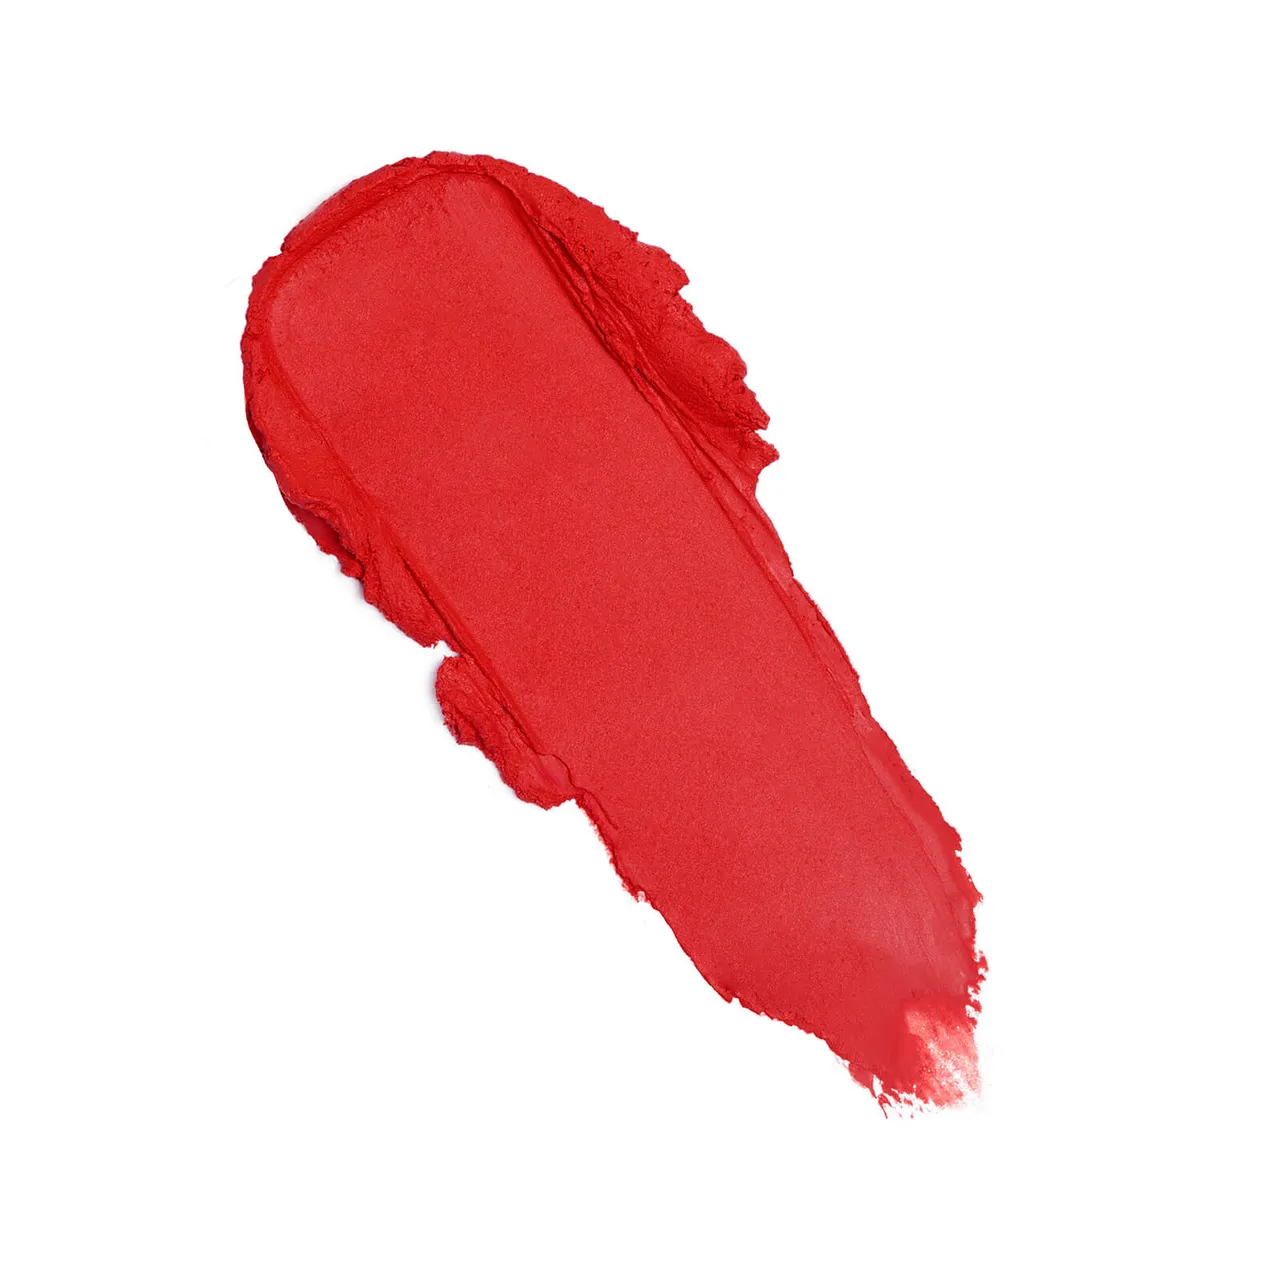 Makeup Revolution Lip Allure Soft Satin Lipstick 50g (Various Shades) - Vibe Red